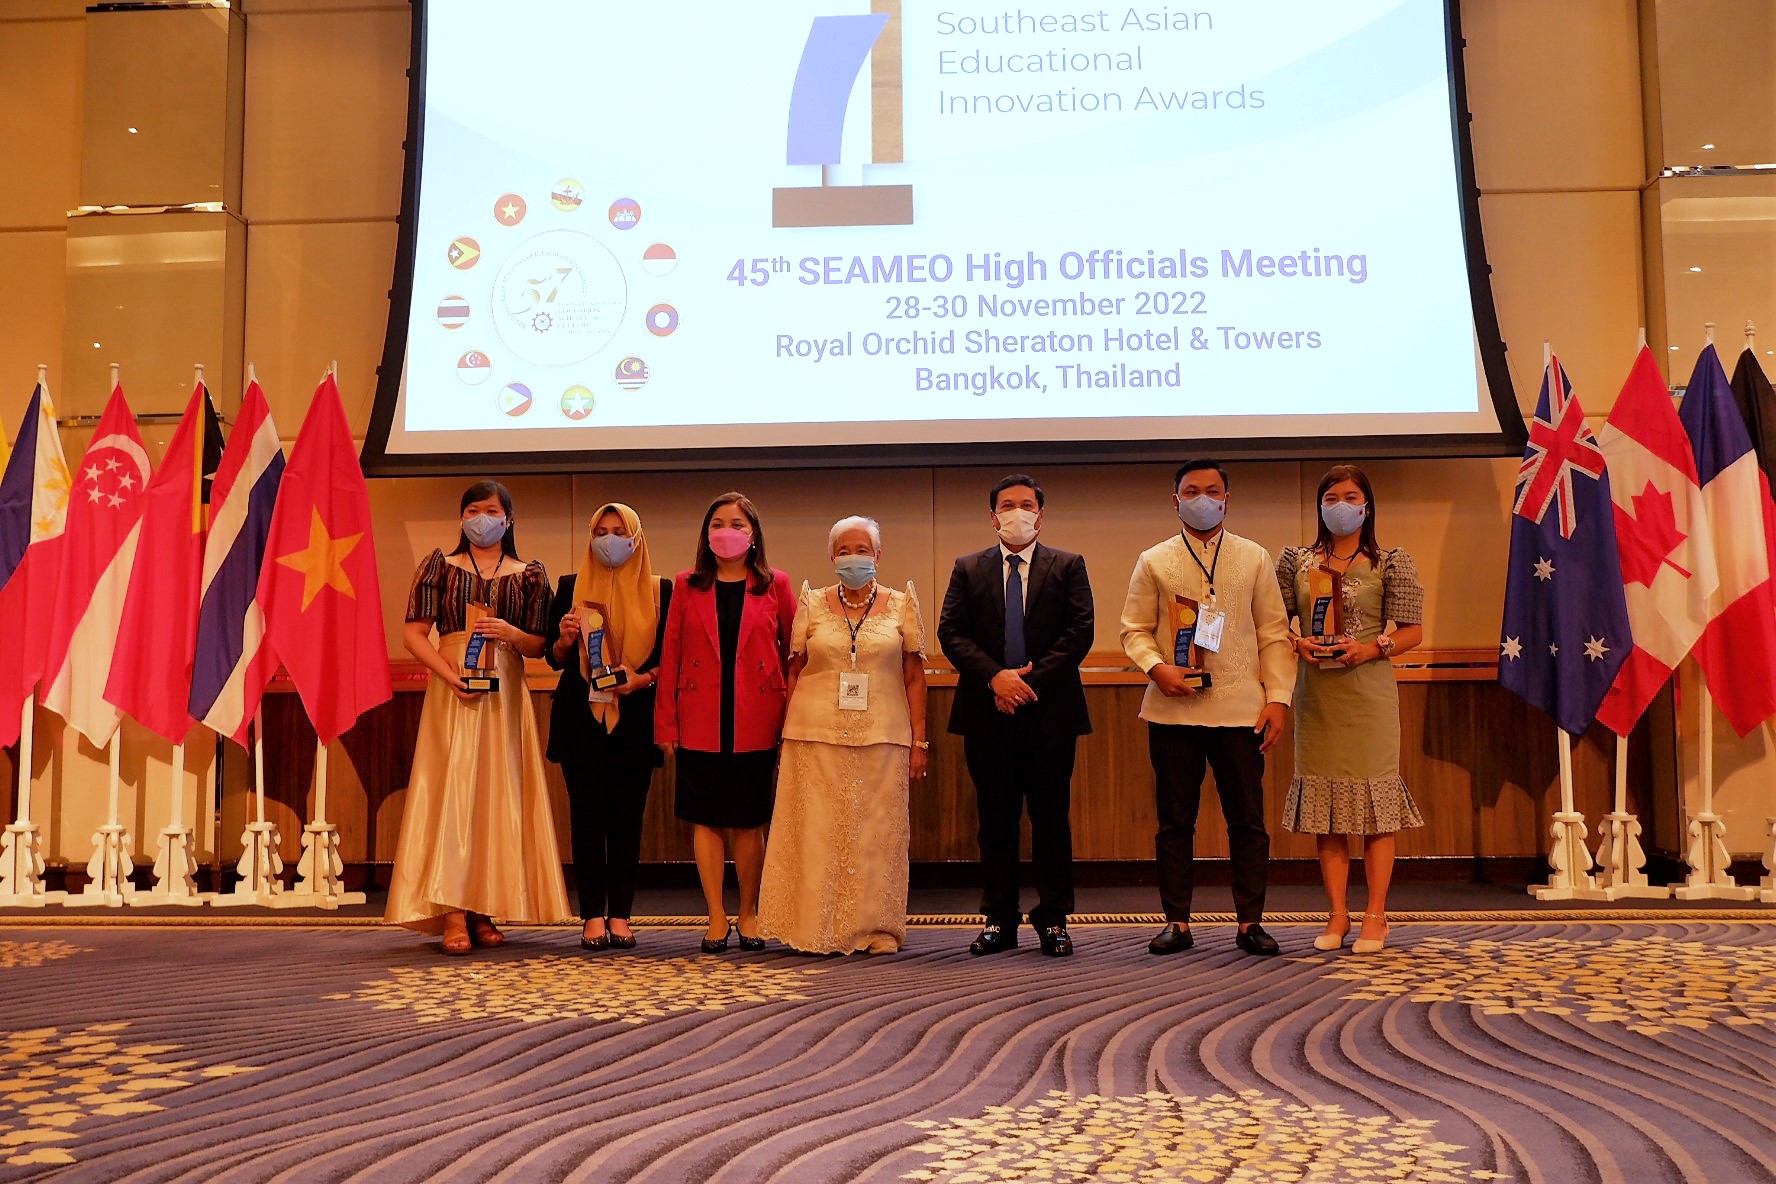 Filipino and Indonesian Educators bag SEA Educational Innovation Awards